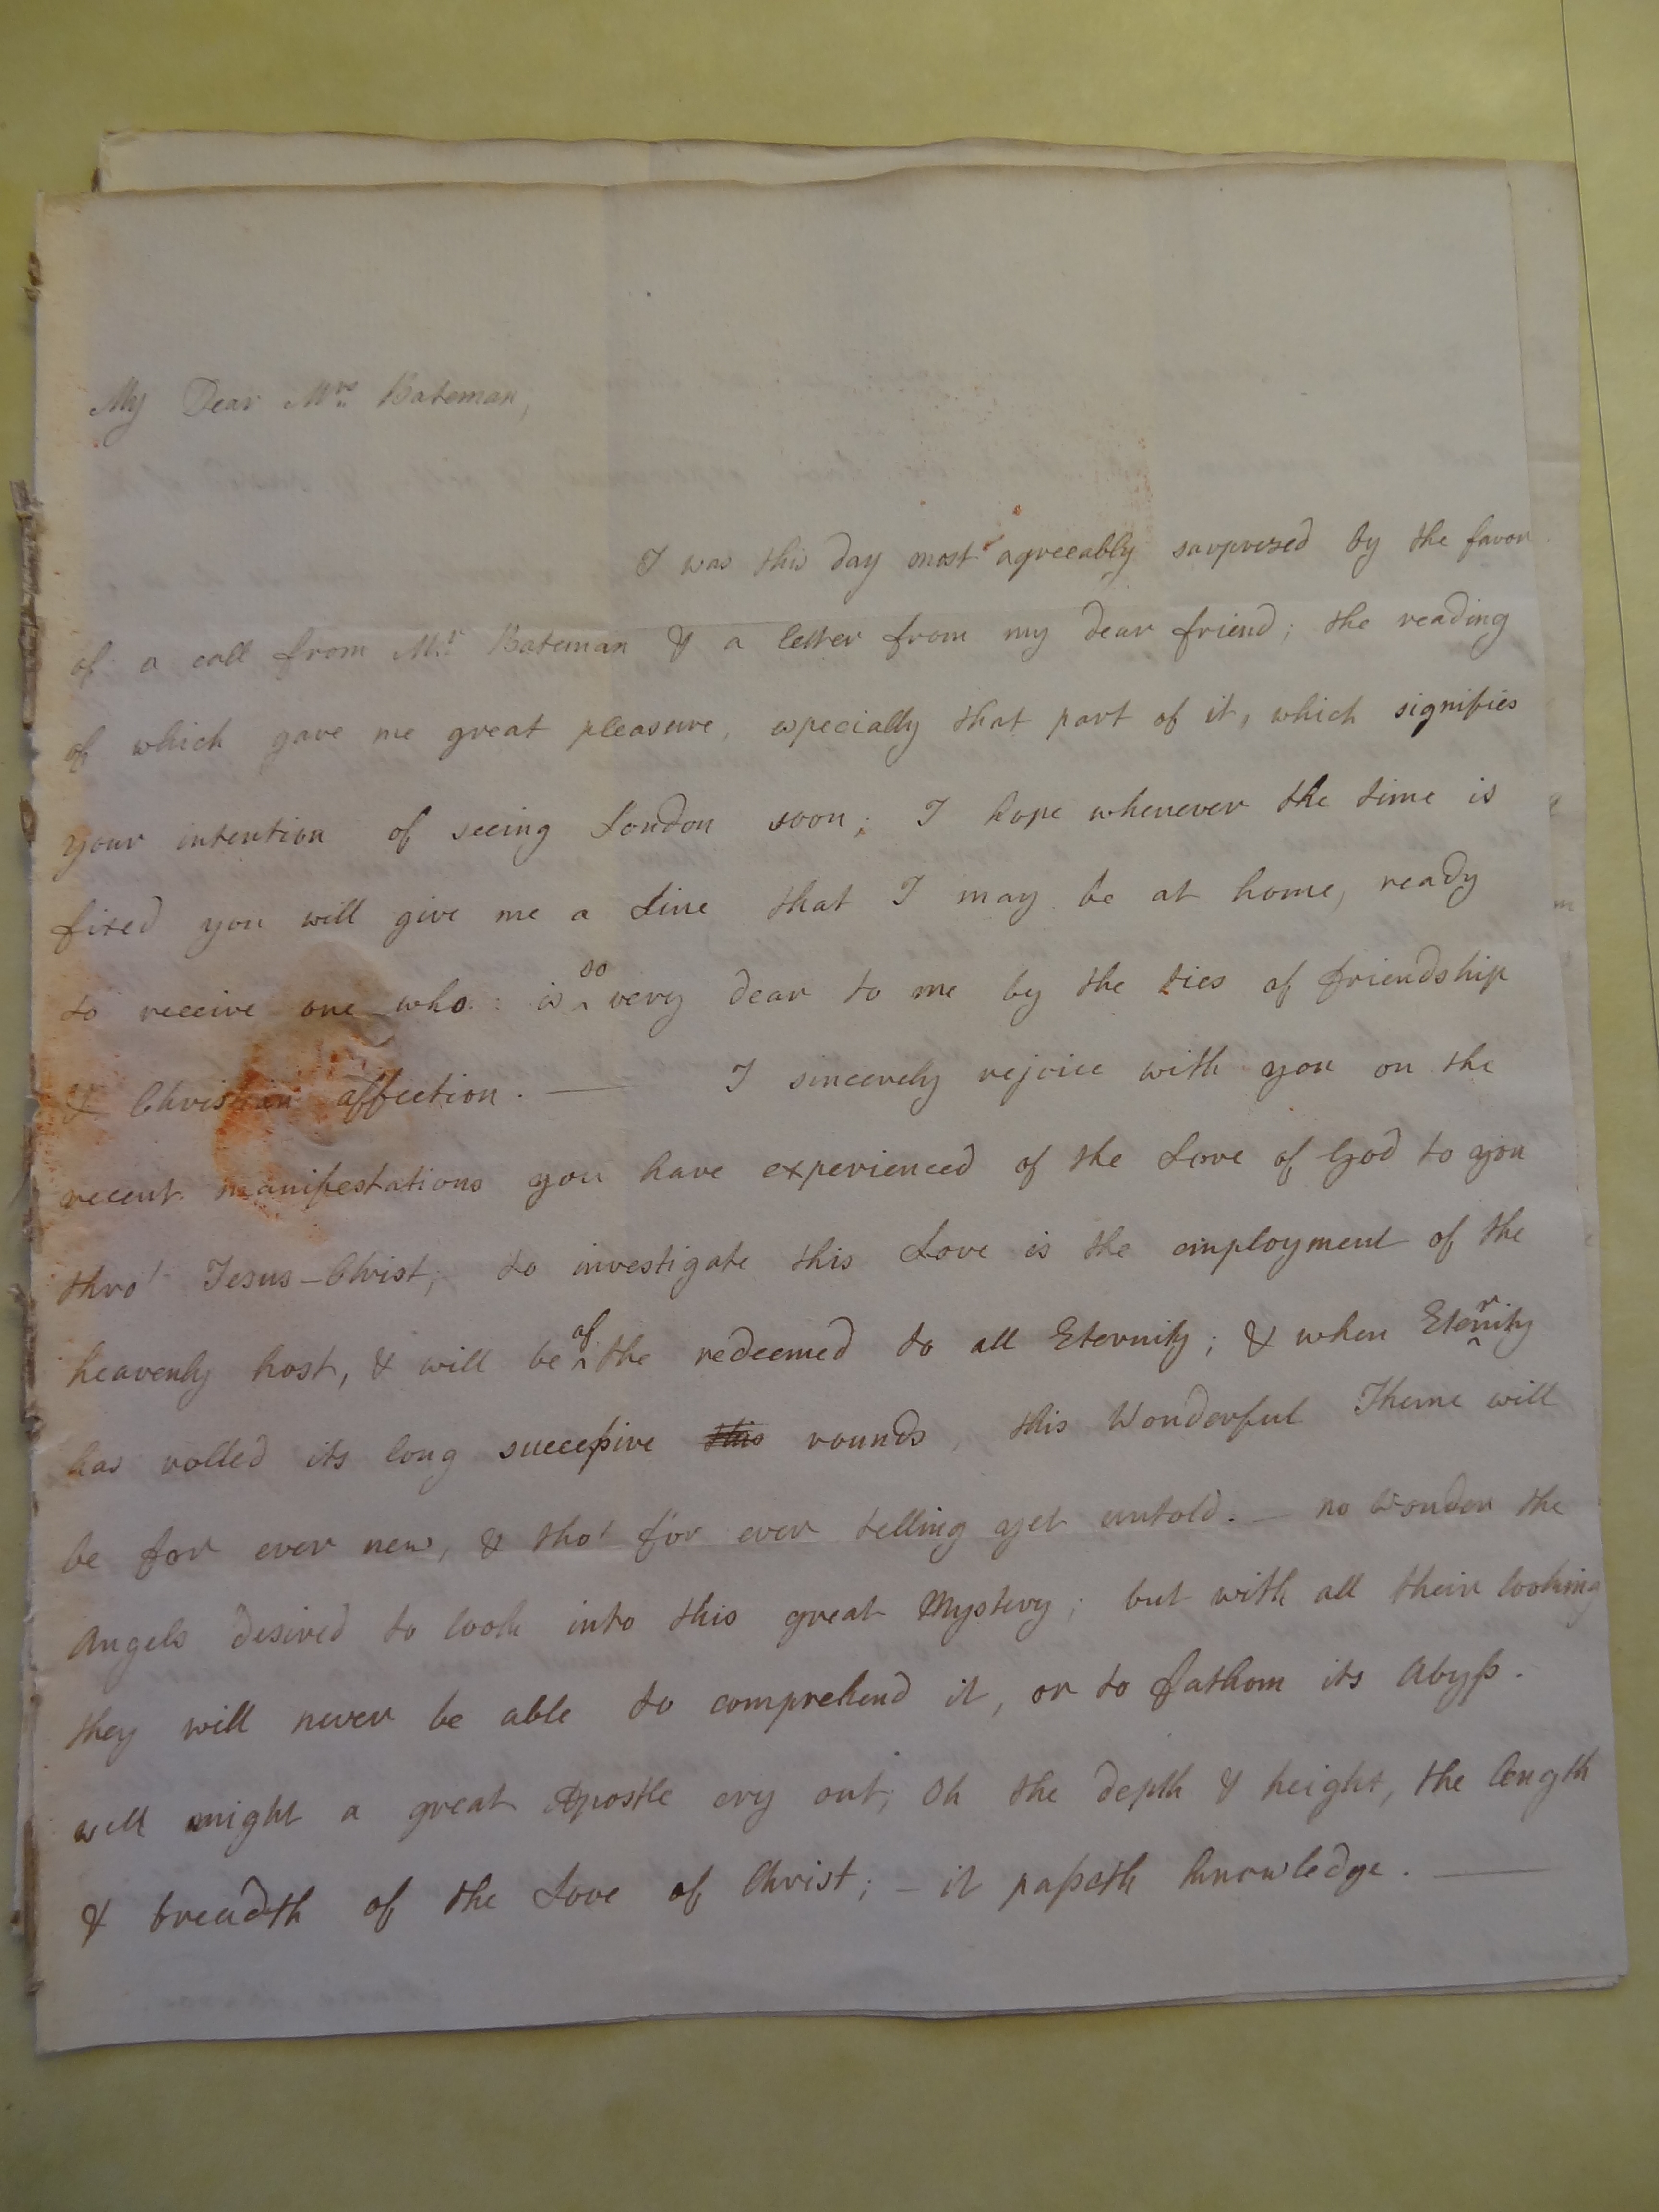 Image #1 of letter: Anna Allwood to Rebekah Bateman, 5 March